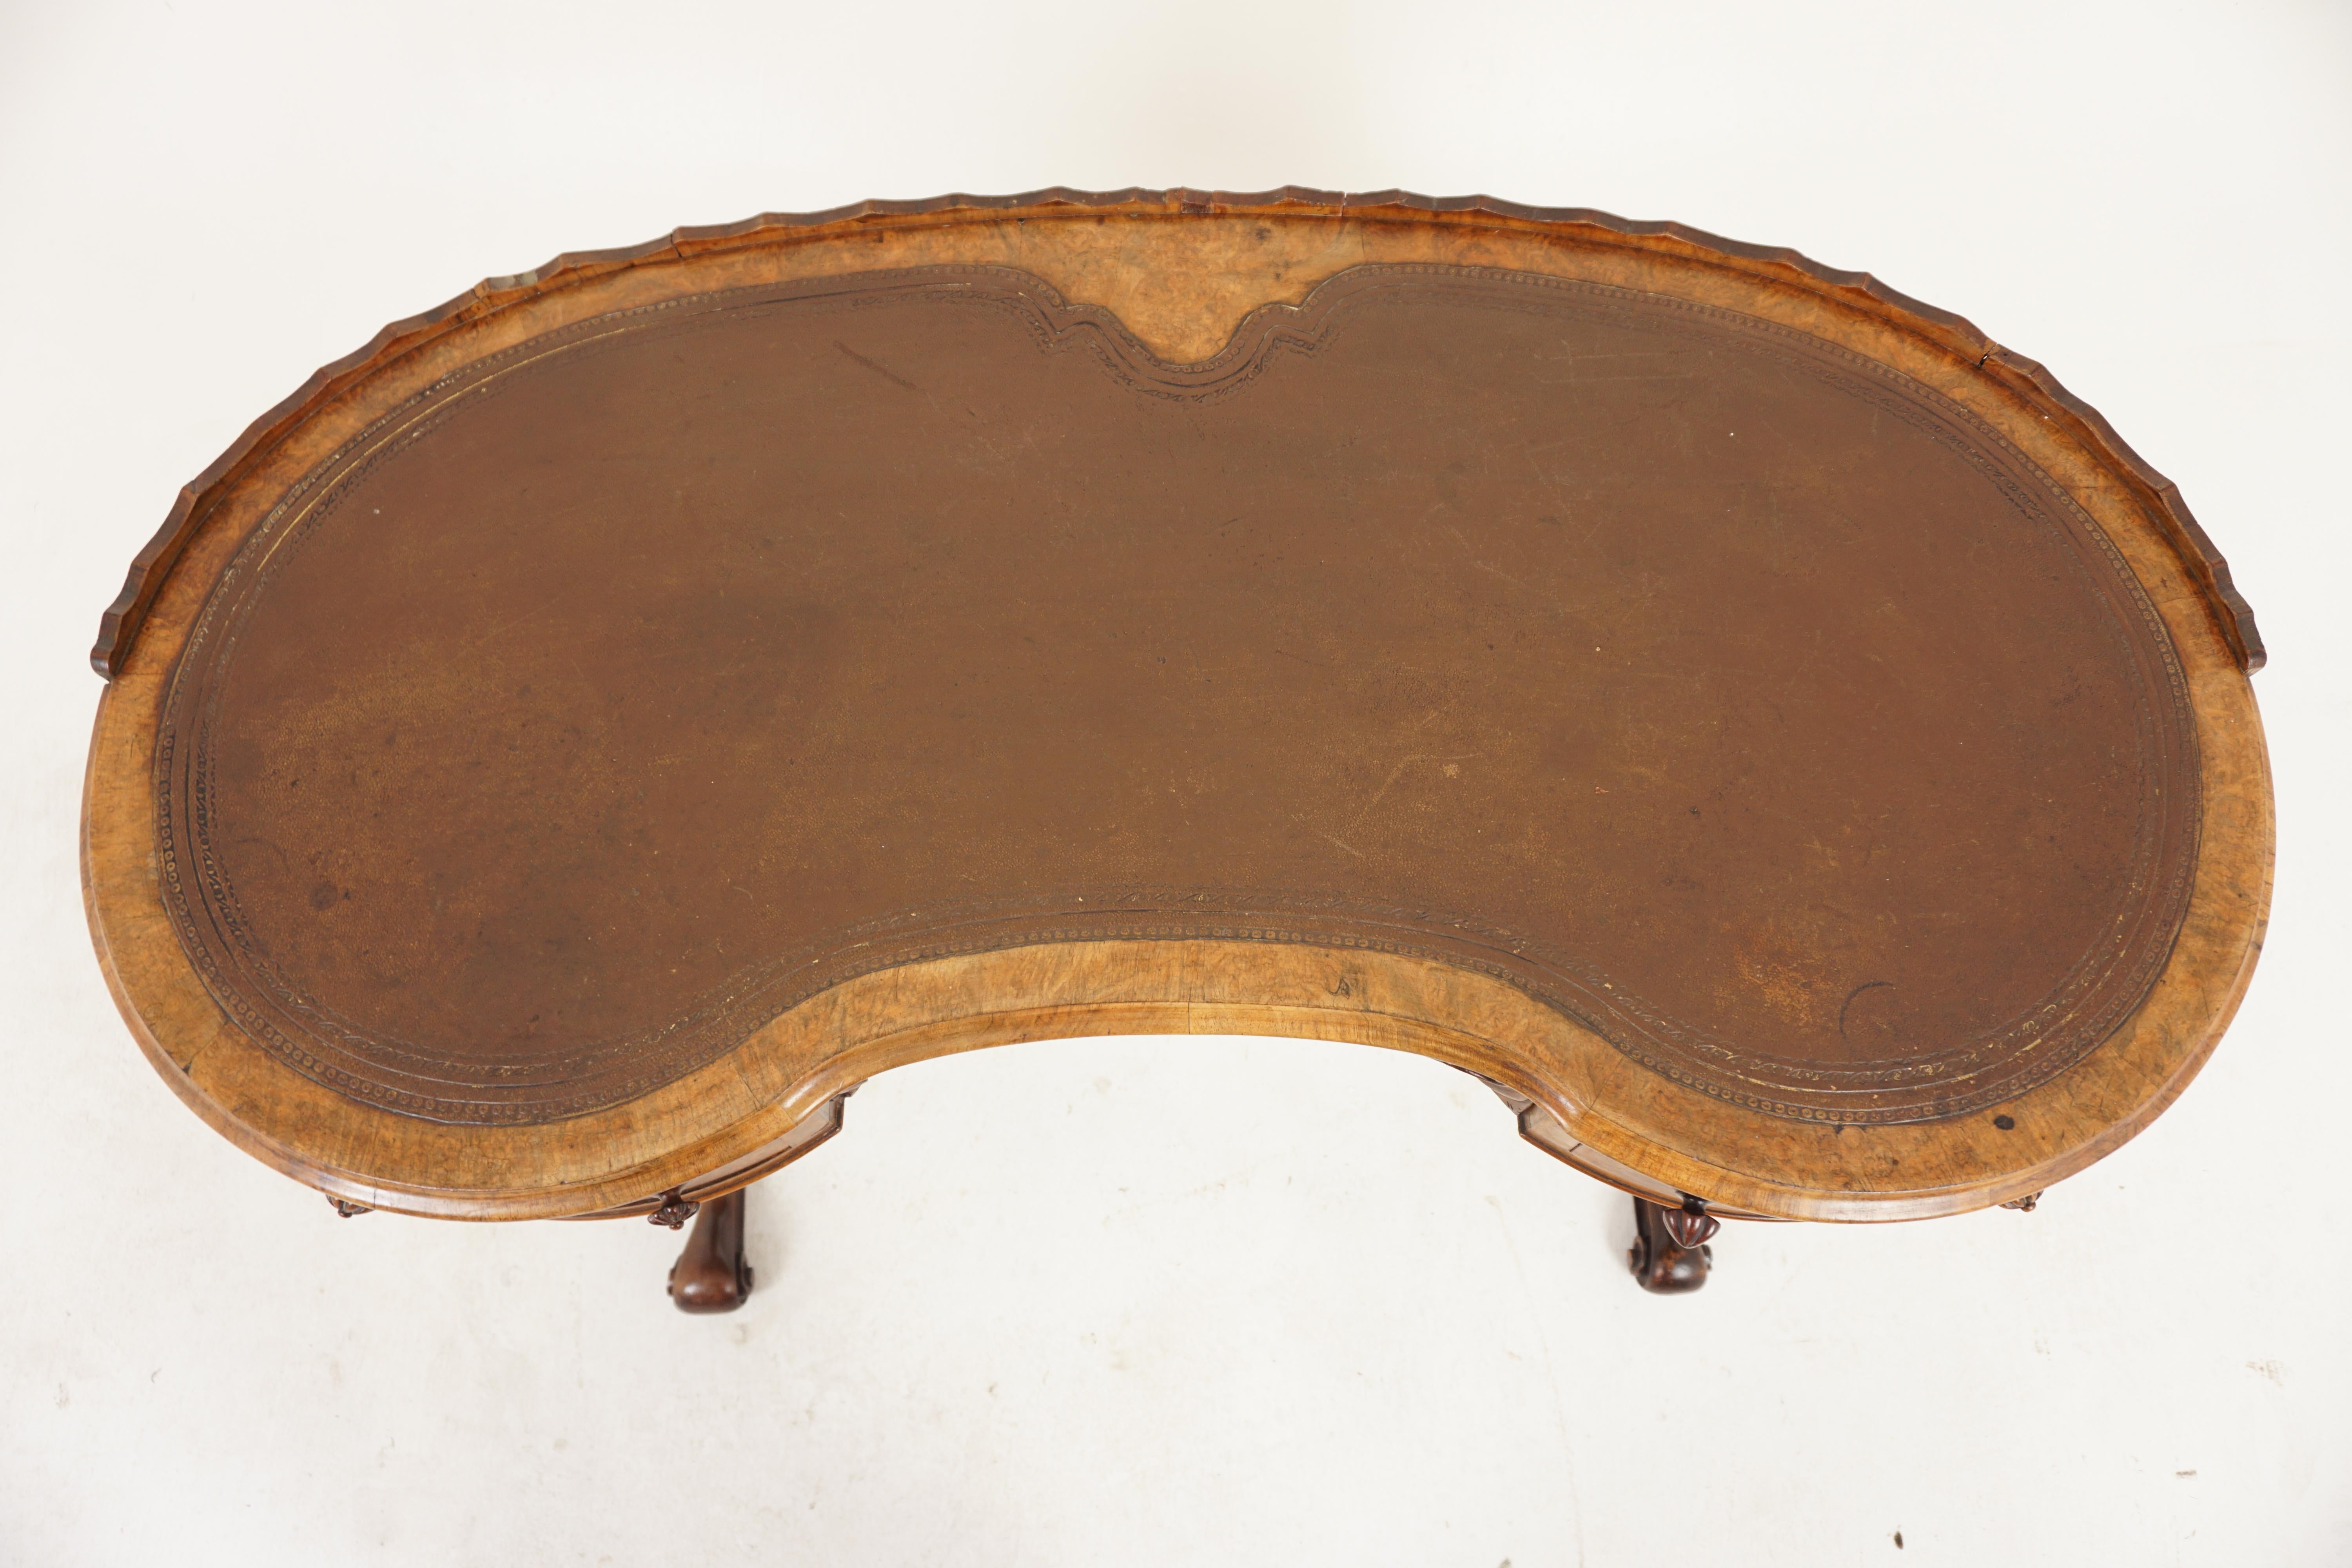 Late 19th Century Antique Burr Walnut Kidney Shaped Desk, Writing Table, Scotland 1870, H1178